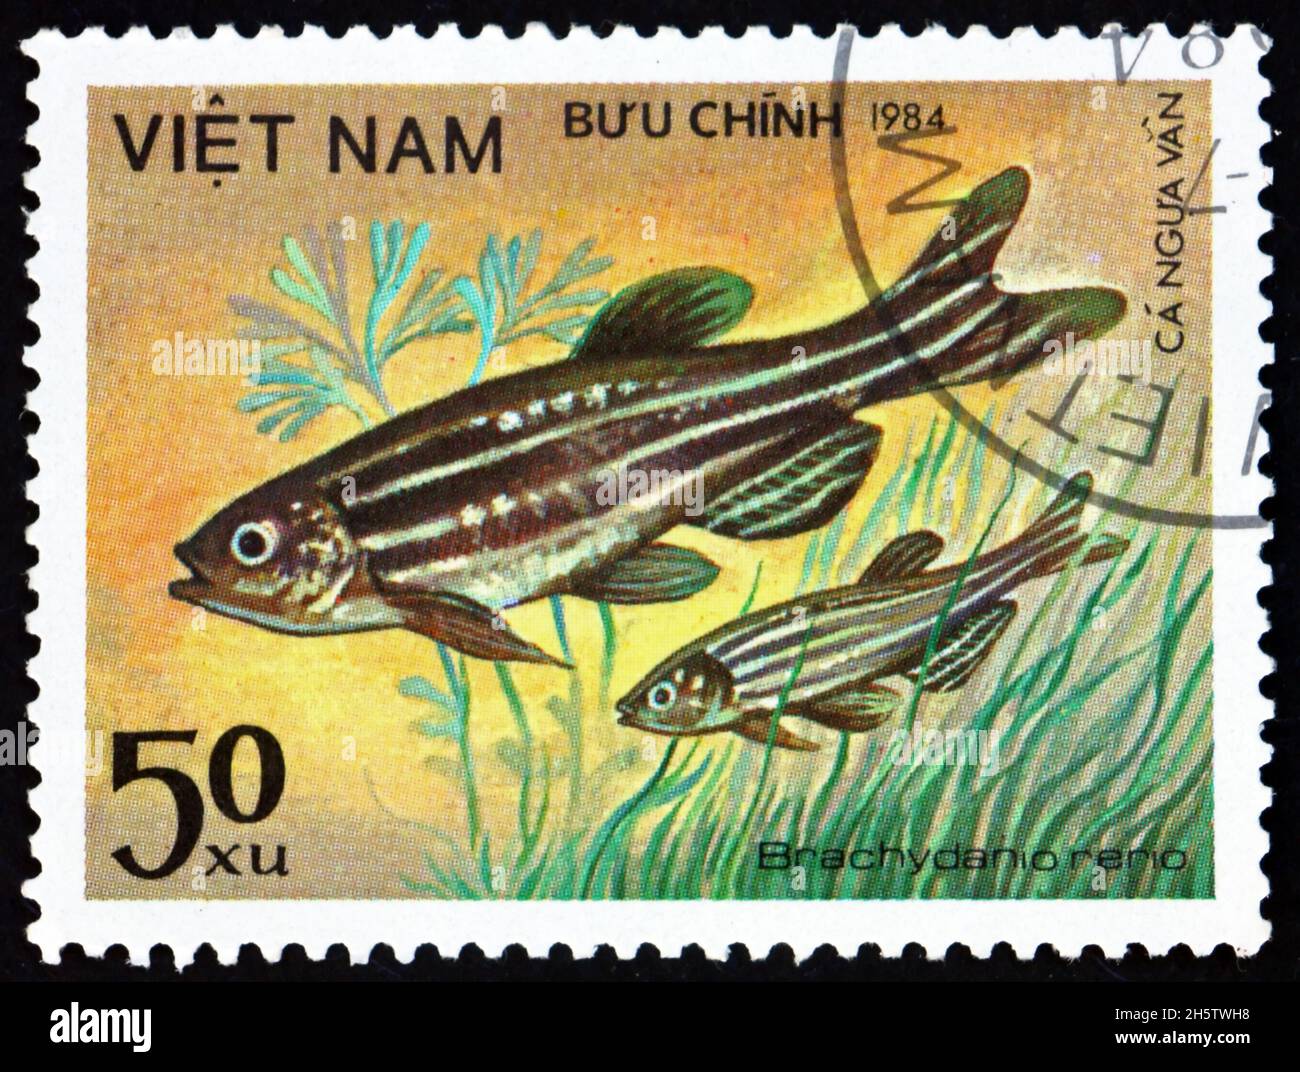 VIETNAM - CIRCA 1984: a stamp printed in Vietnam shows zebrafish, brachydanio rerio, is a species of freshwater tropical fish, circa 1984 Stock Photo